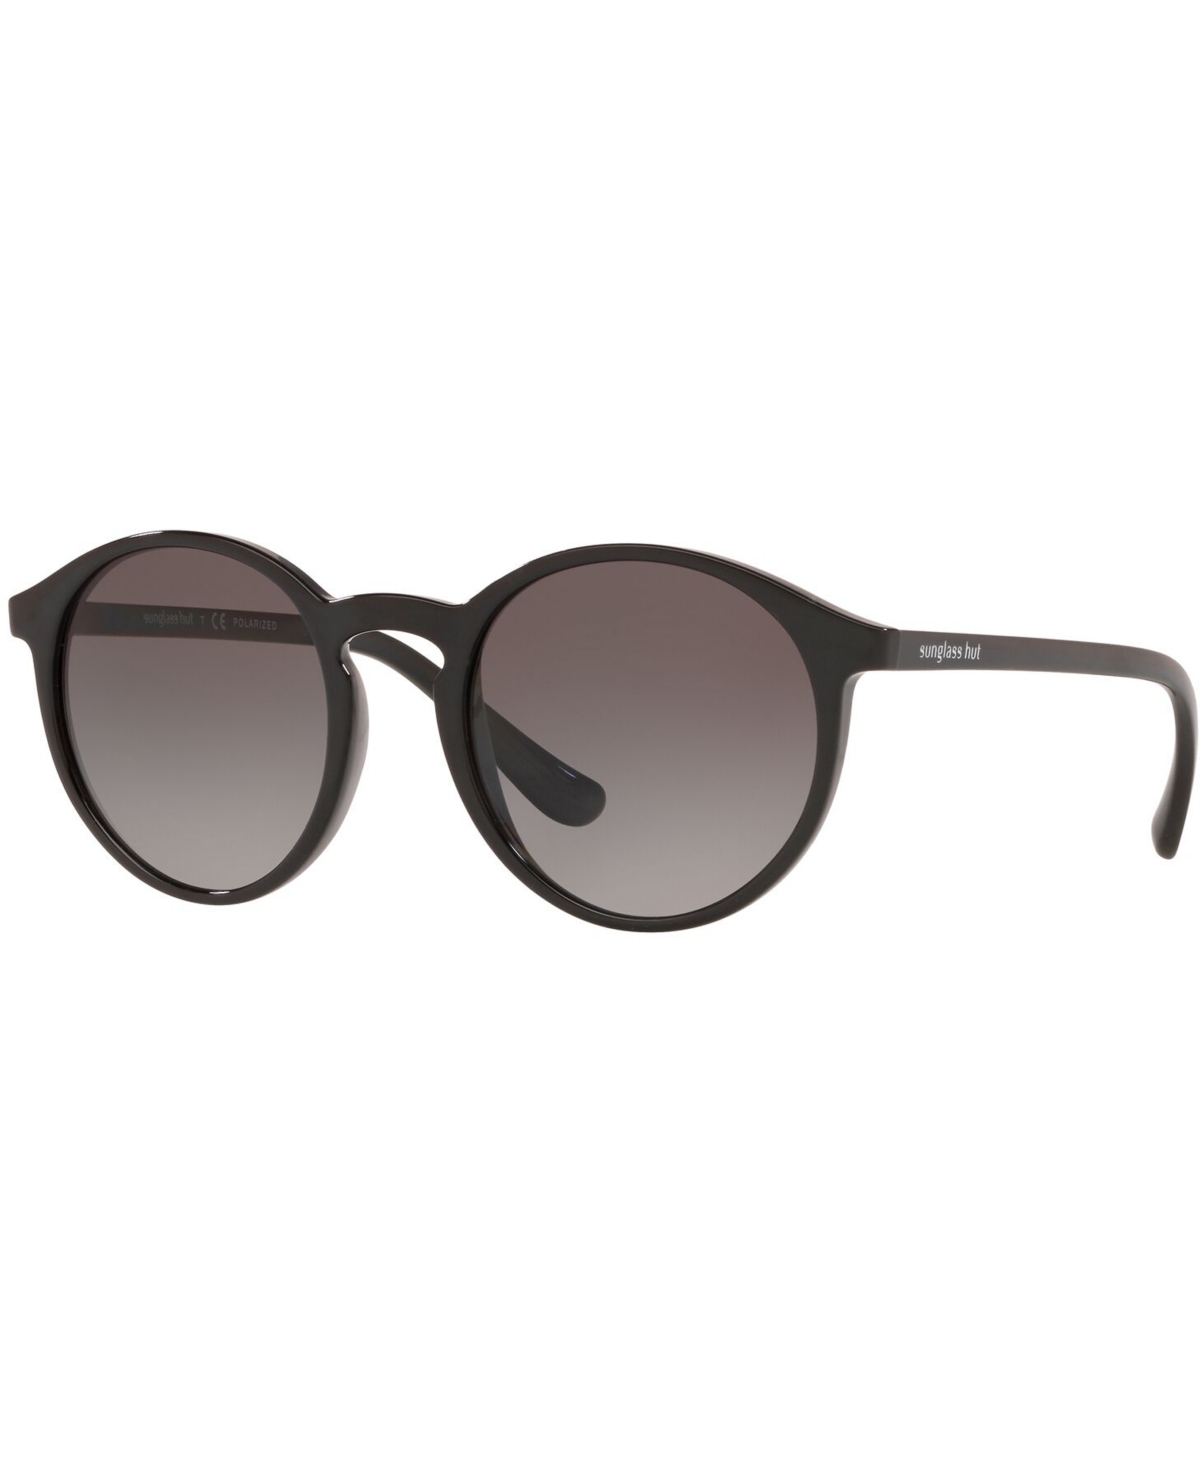 Sunglass Hut Collection Polarized Sunglasses, 0hu2019 In Shiny Black,polar Gradient Grey